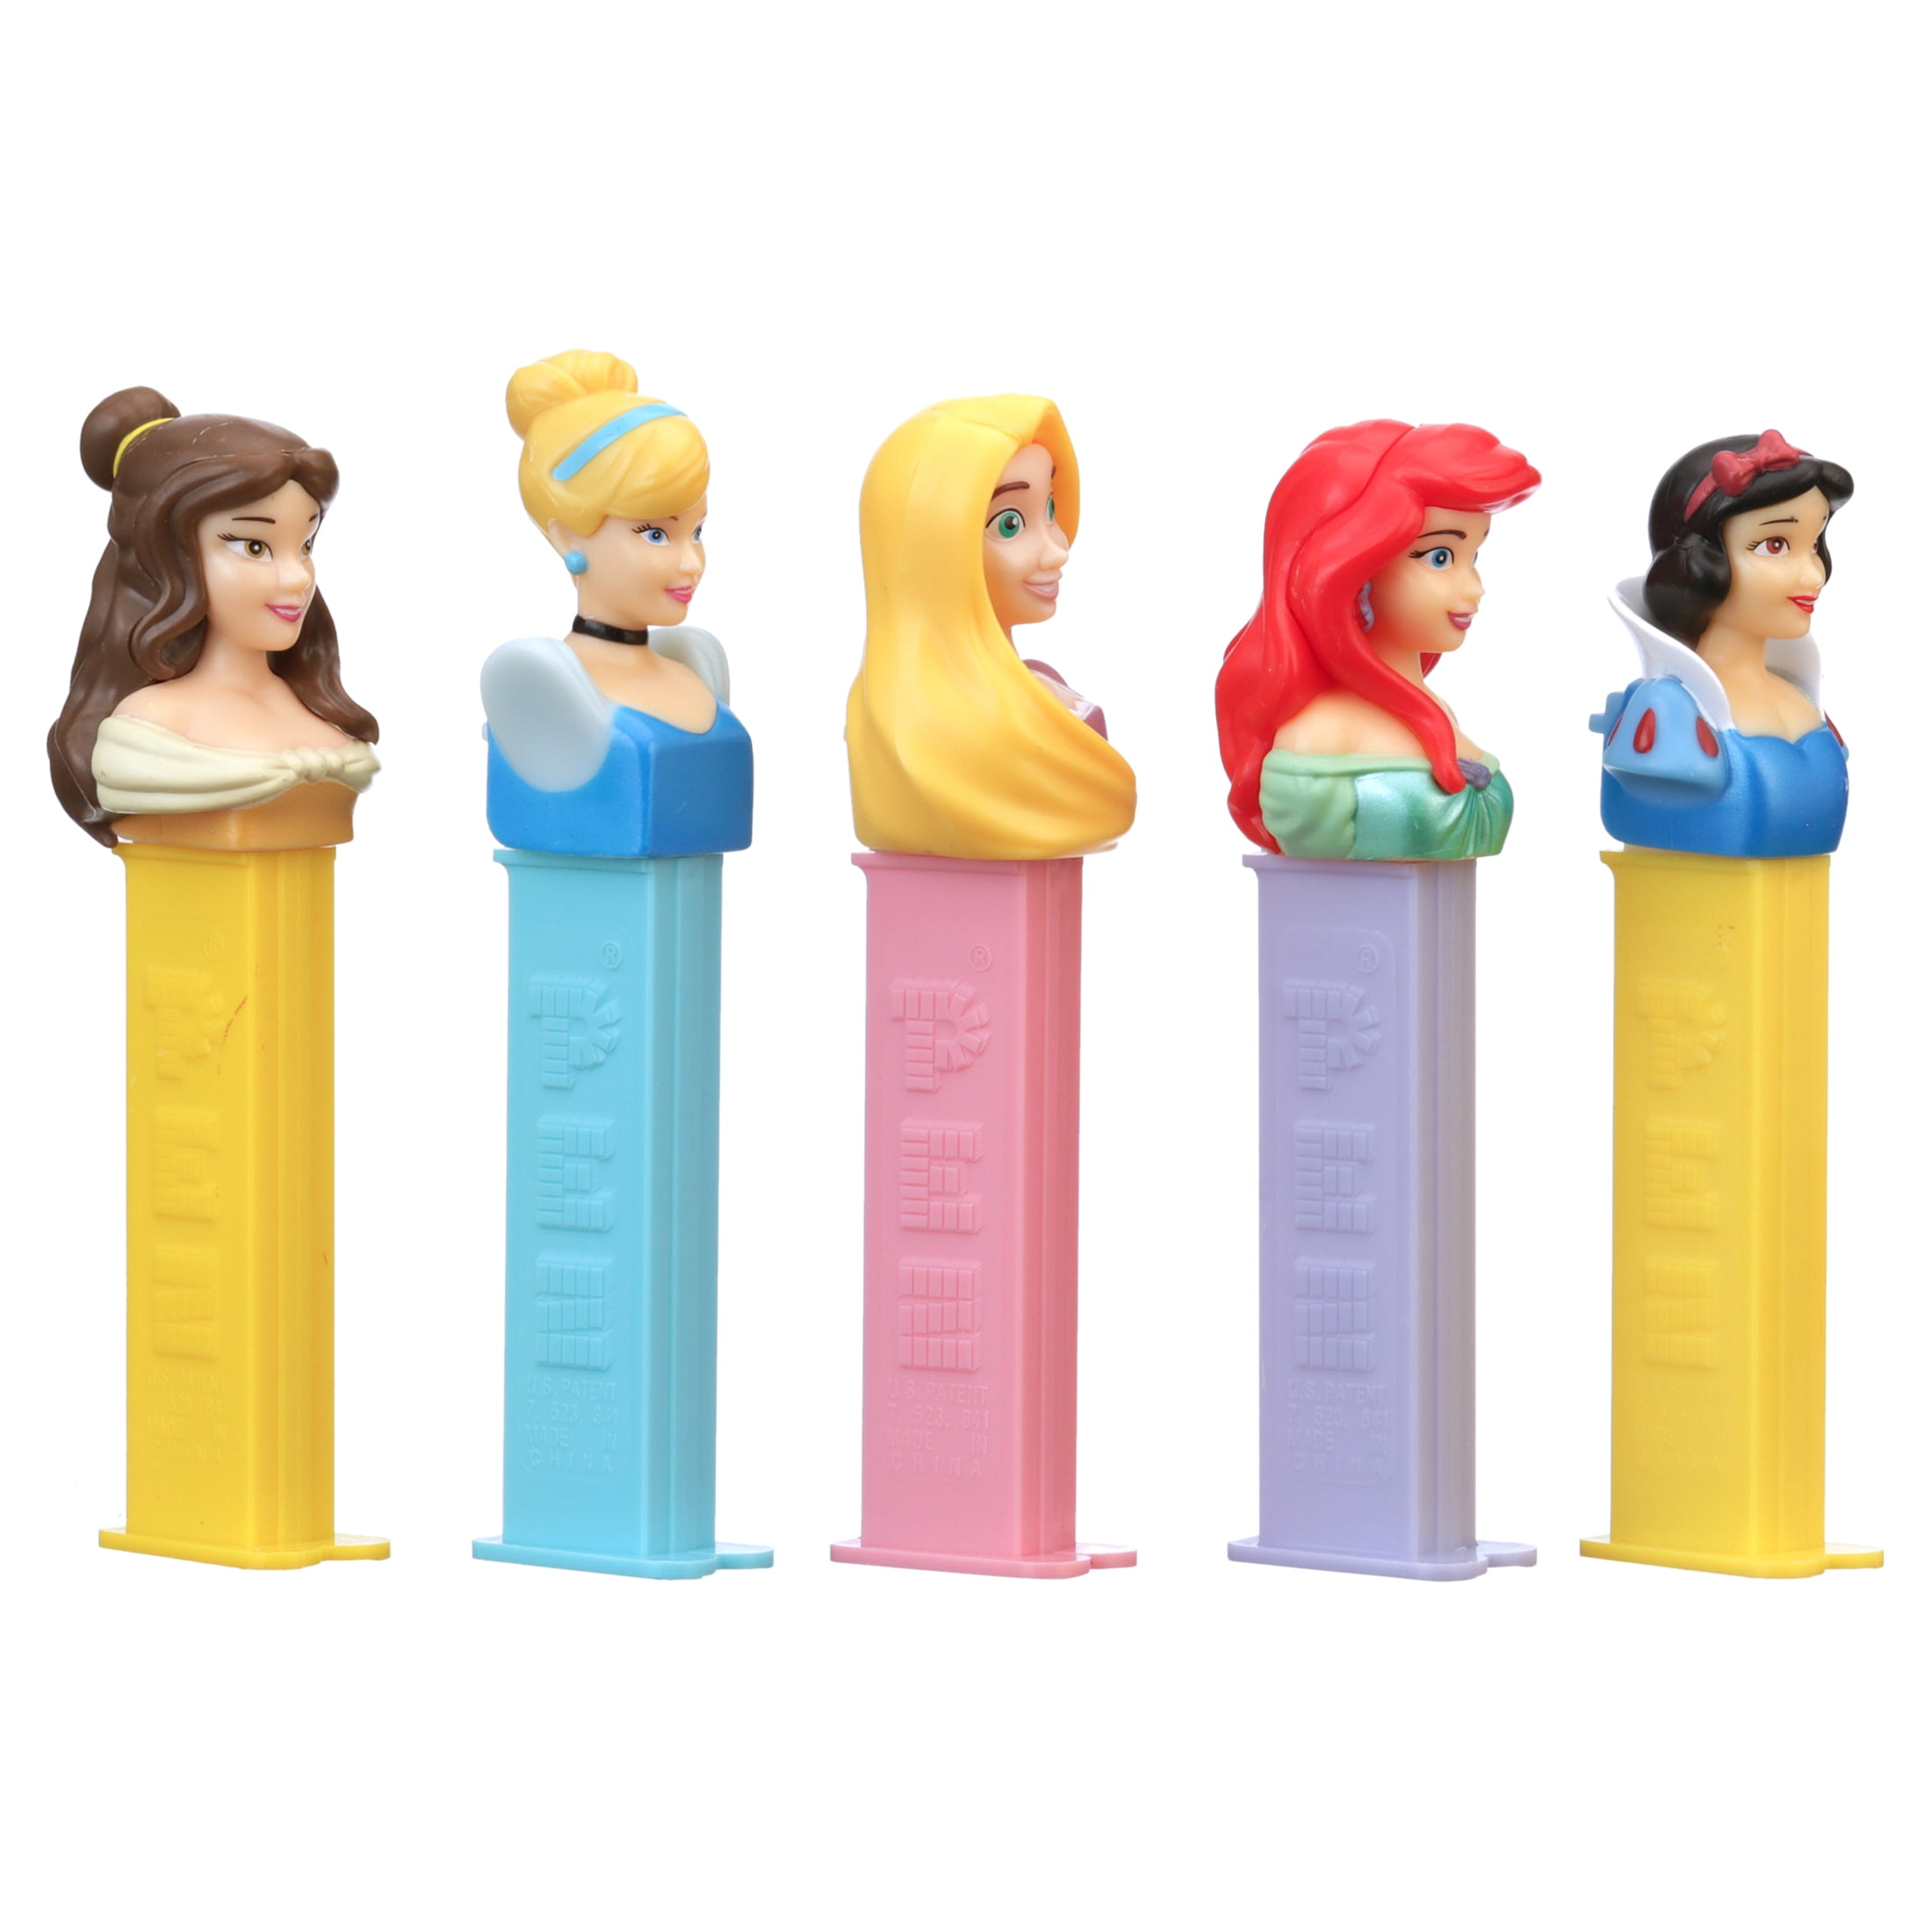 Brand New Sealed UP-K Set of 2 PEZ Disney Princess Candy Dispensers w/ Candy 